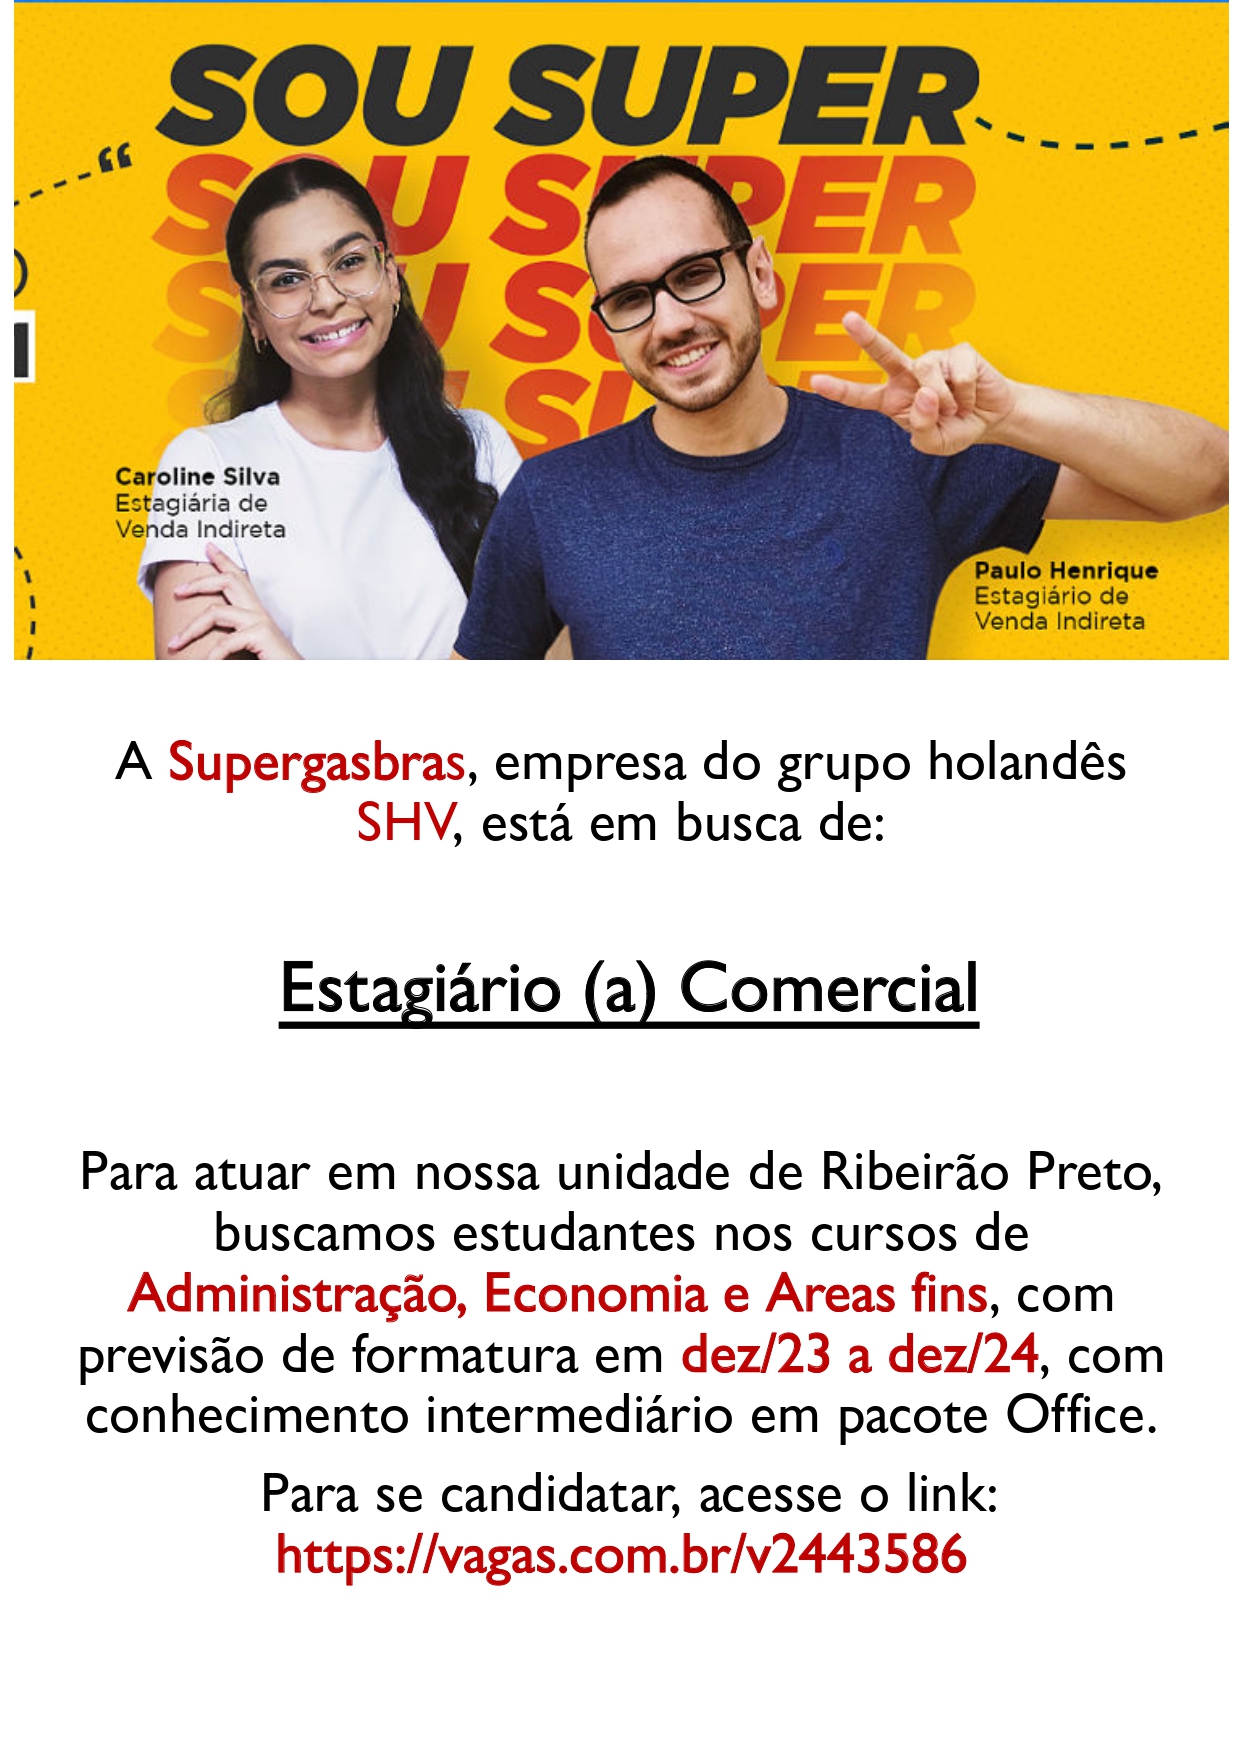 Supergasbras_page-0001.jpg